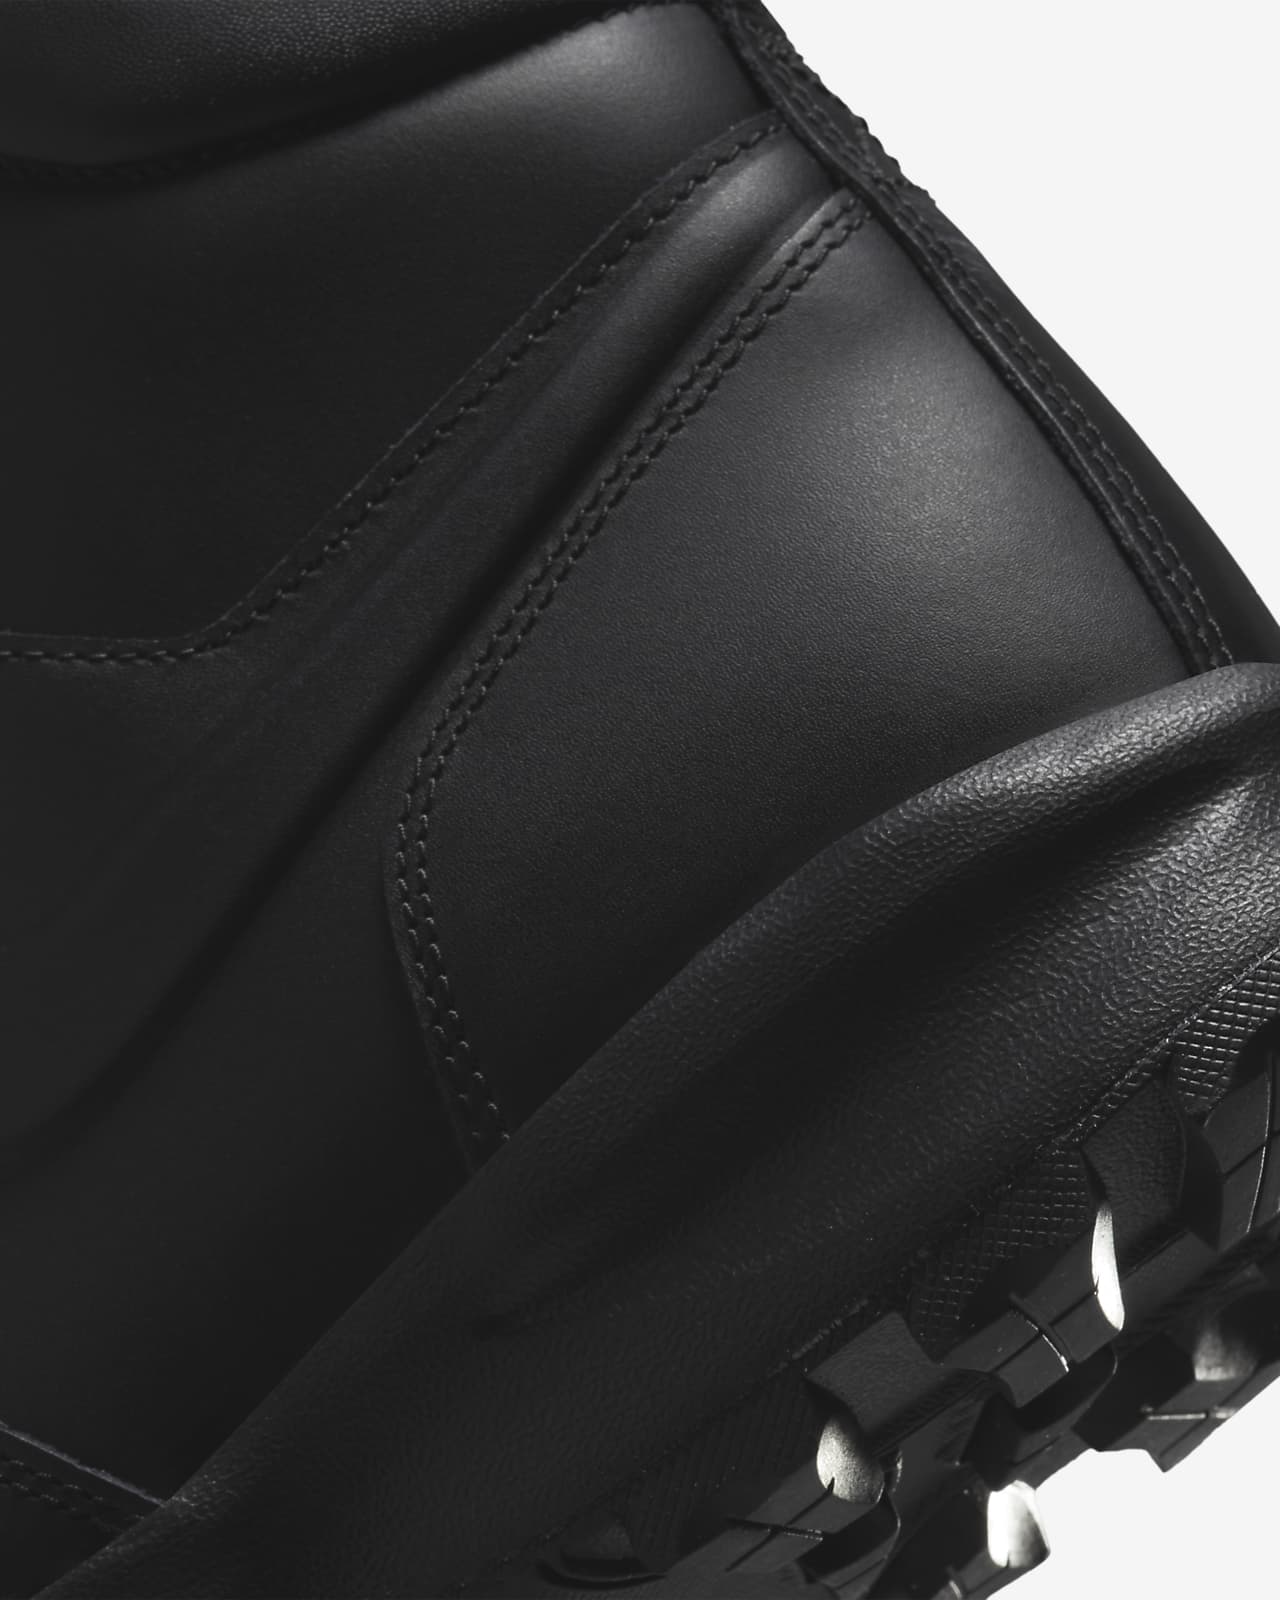 Nike Manoa Leather Botas - ES